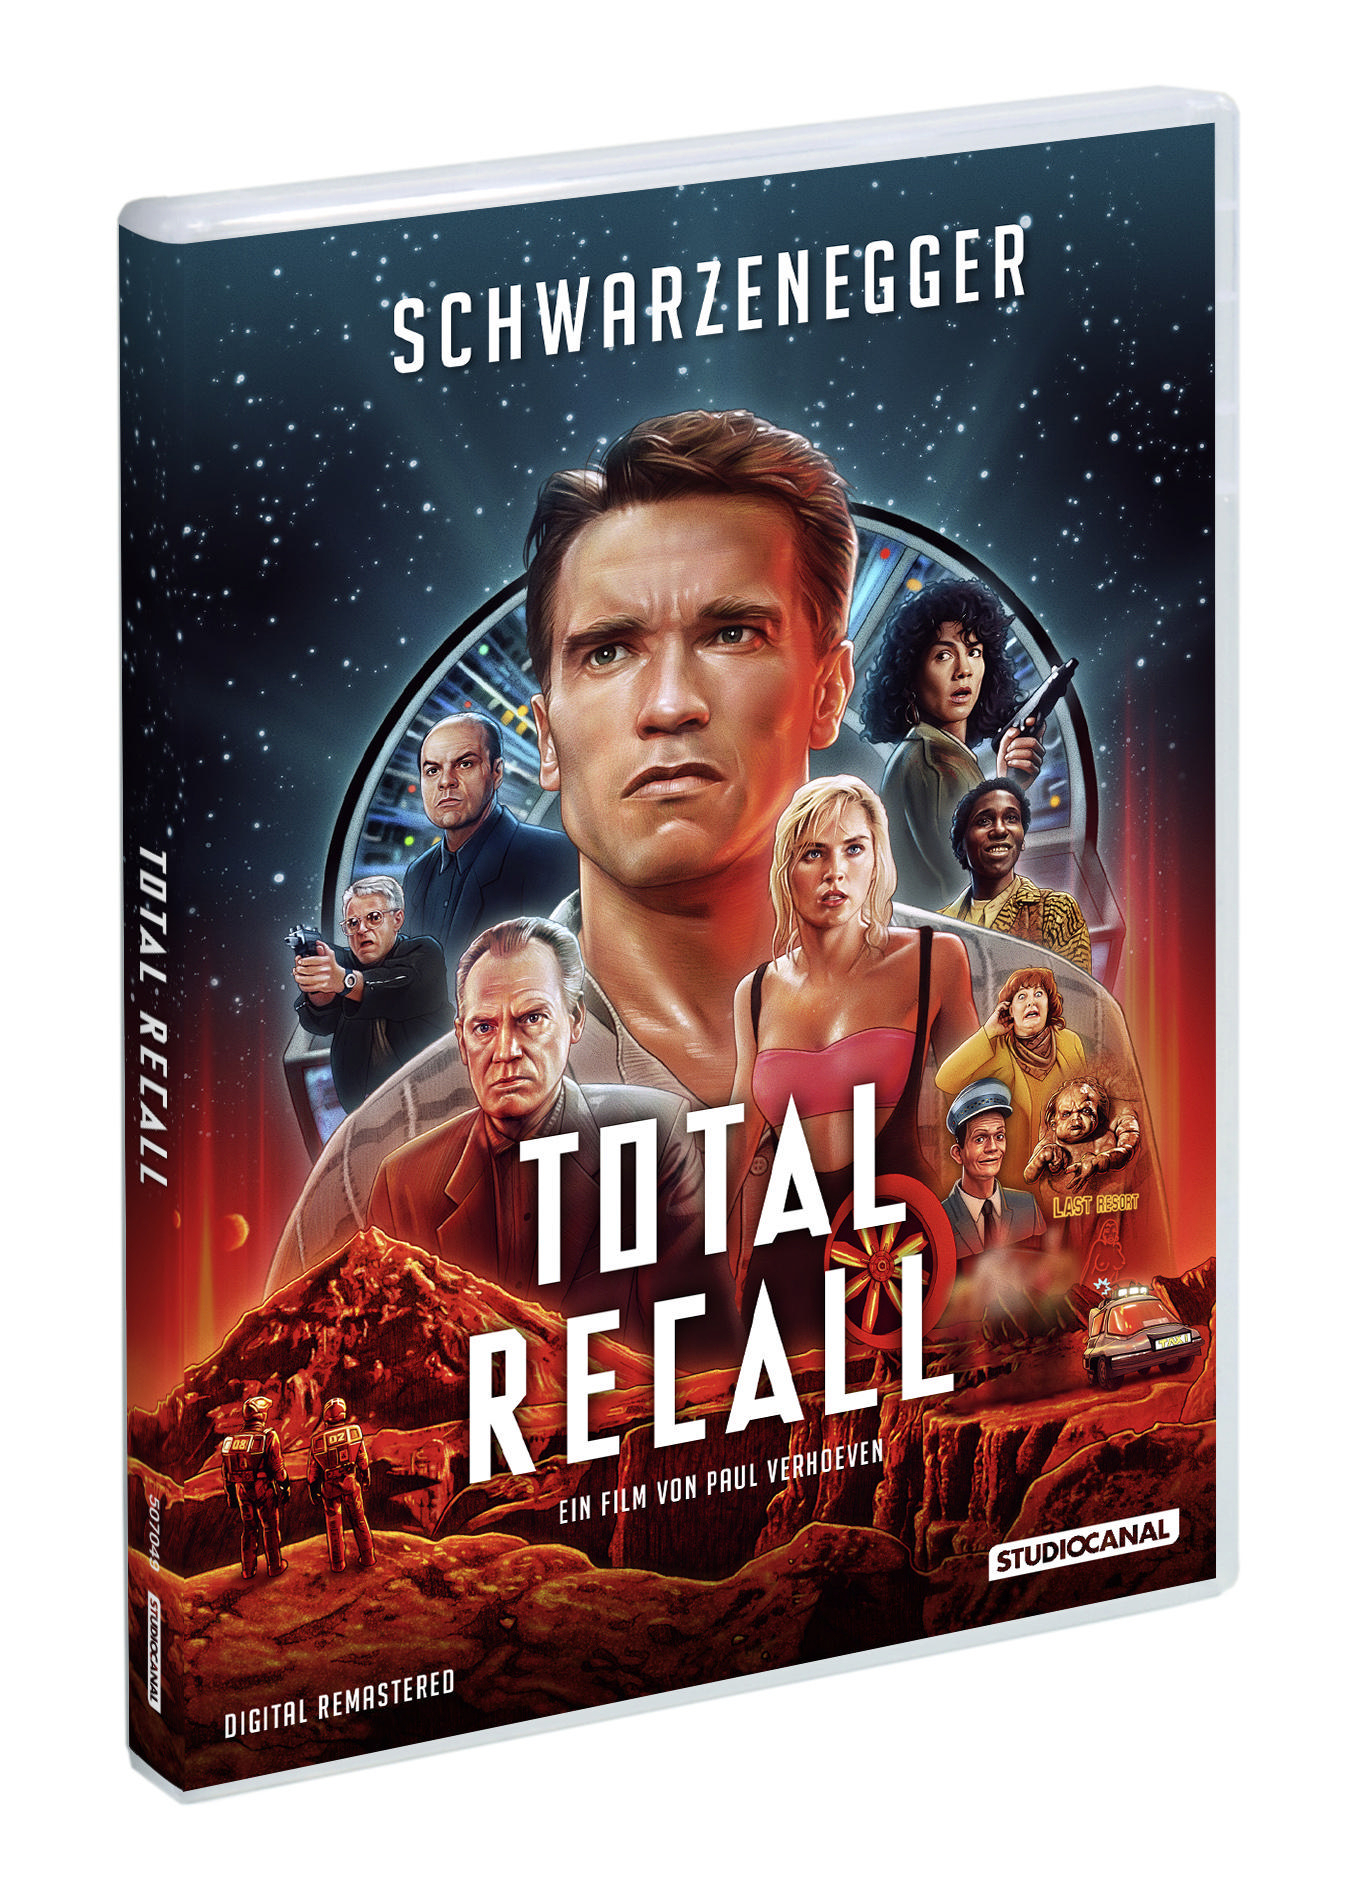 Total Recall - Die totale Erinnerung DVD